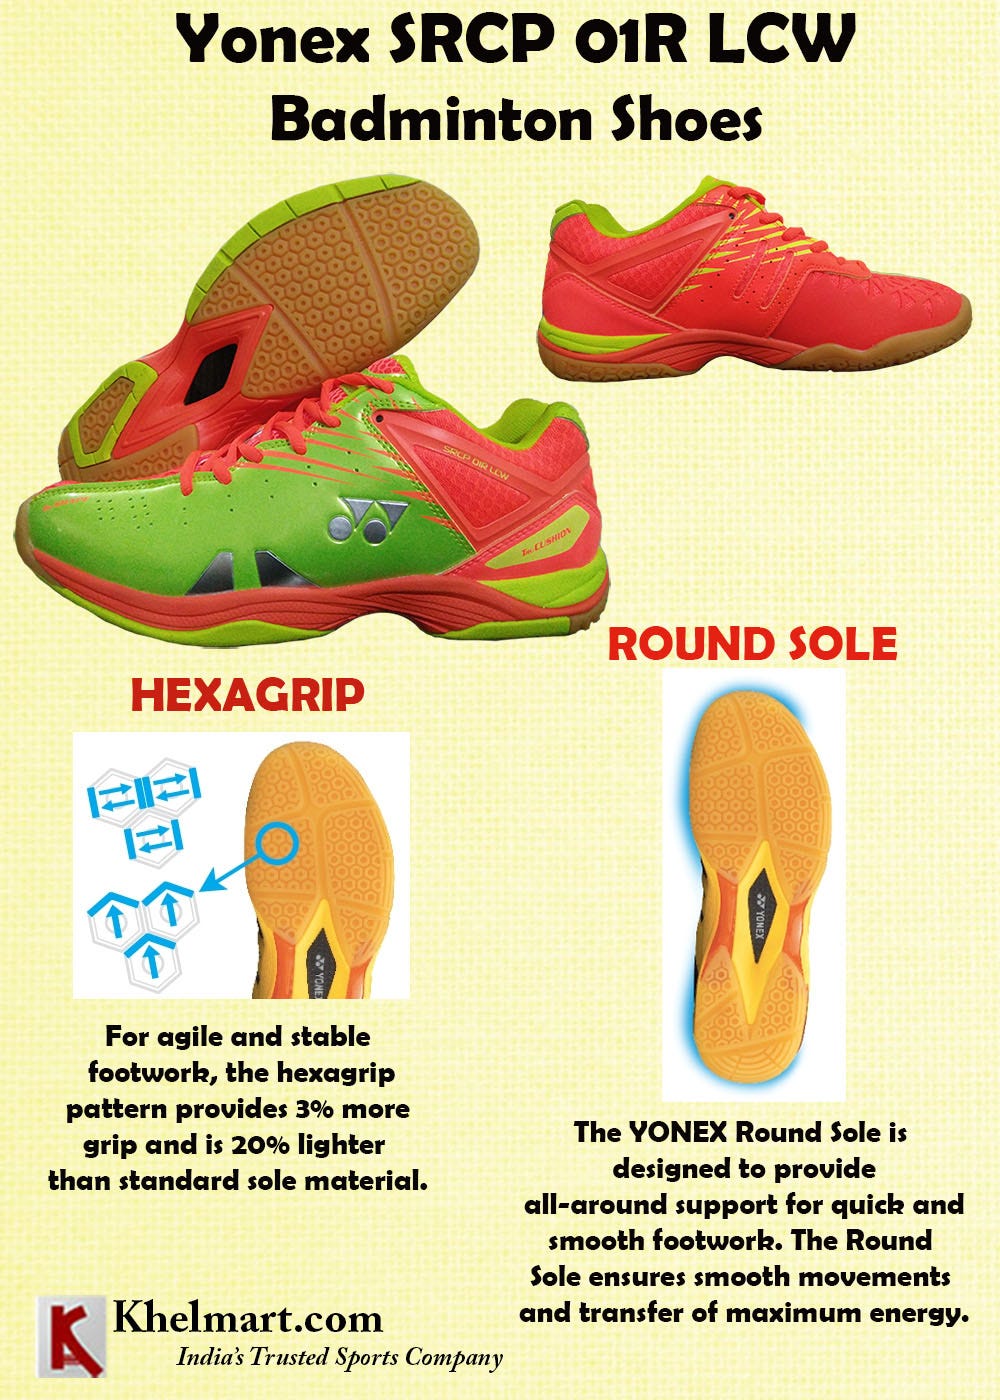 khelmart yonex badminton shoes